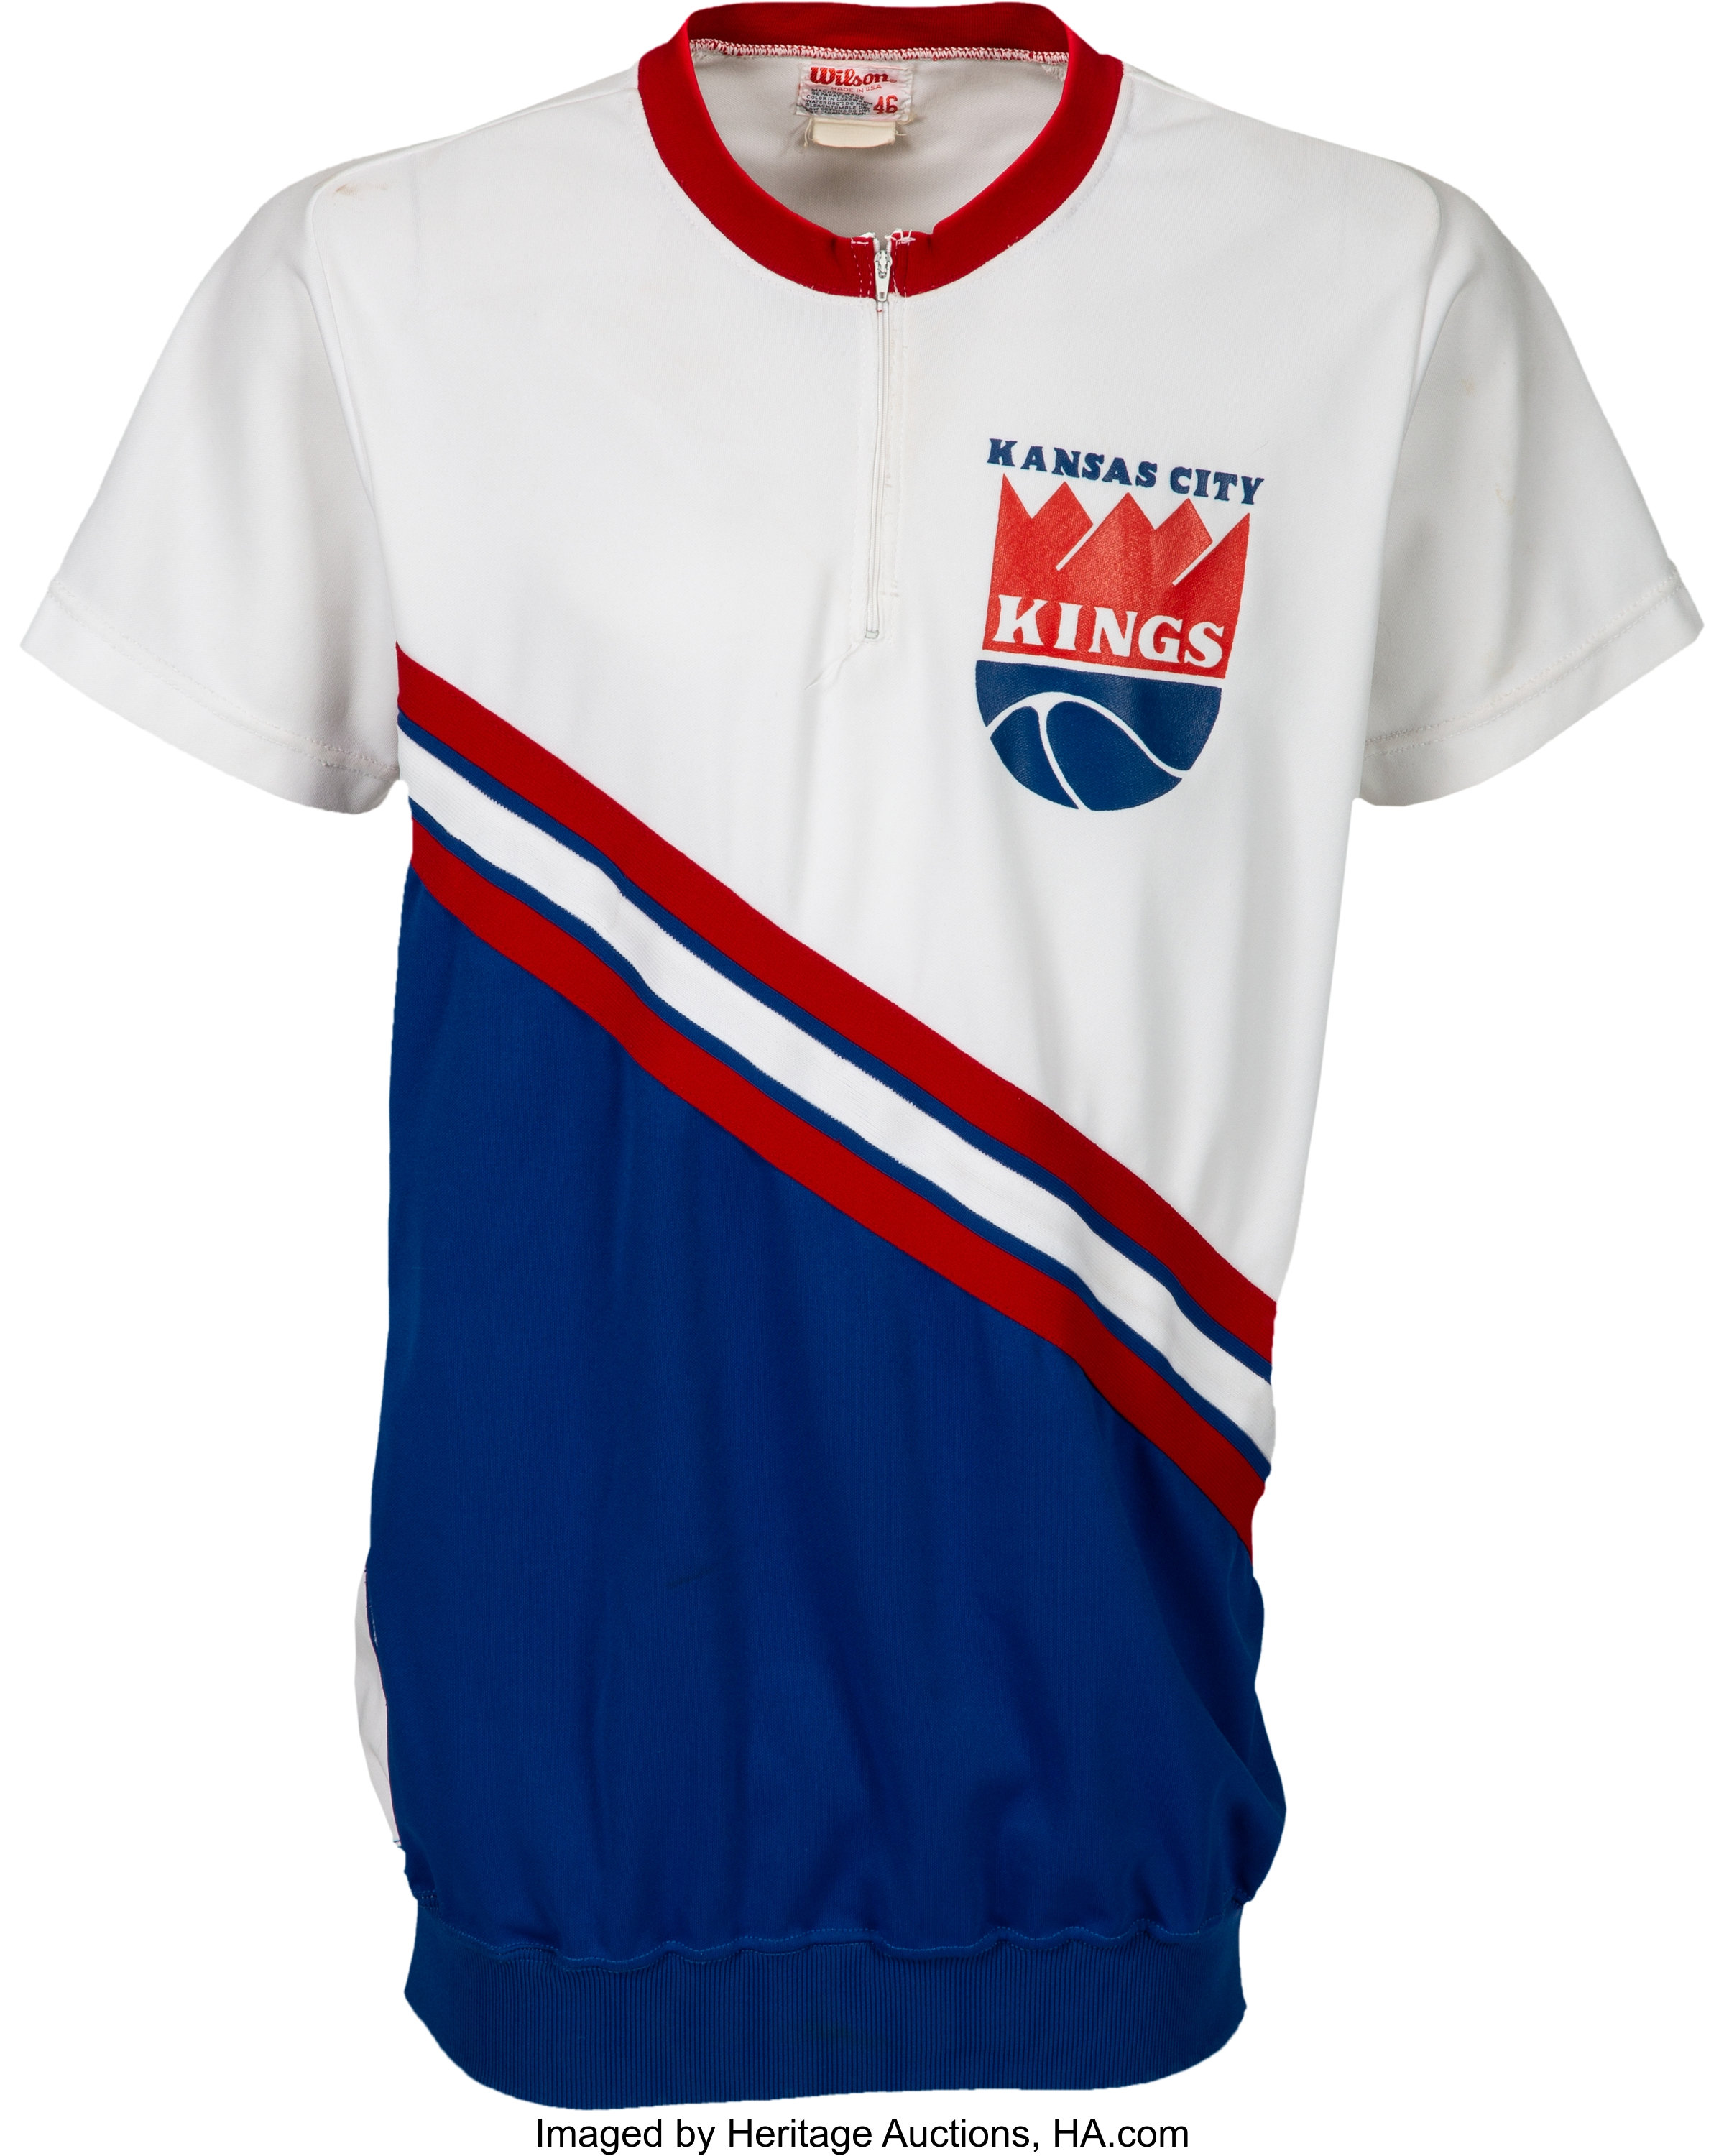 NBA Jersey Database, Kansas City Kings 1976-1981 Record: 206-204 (50%)